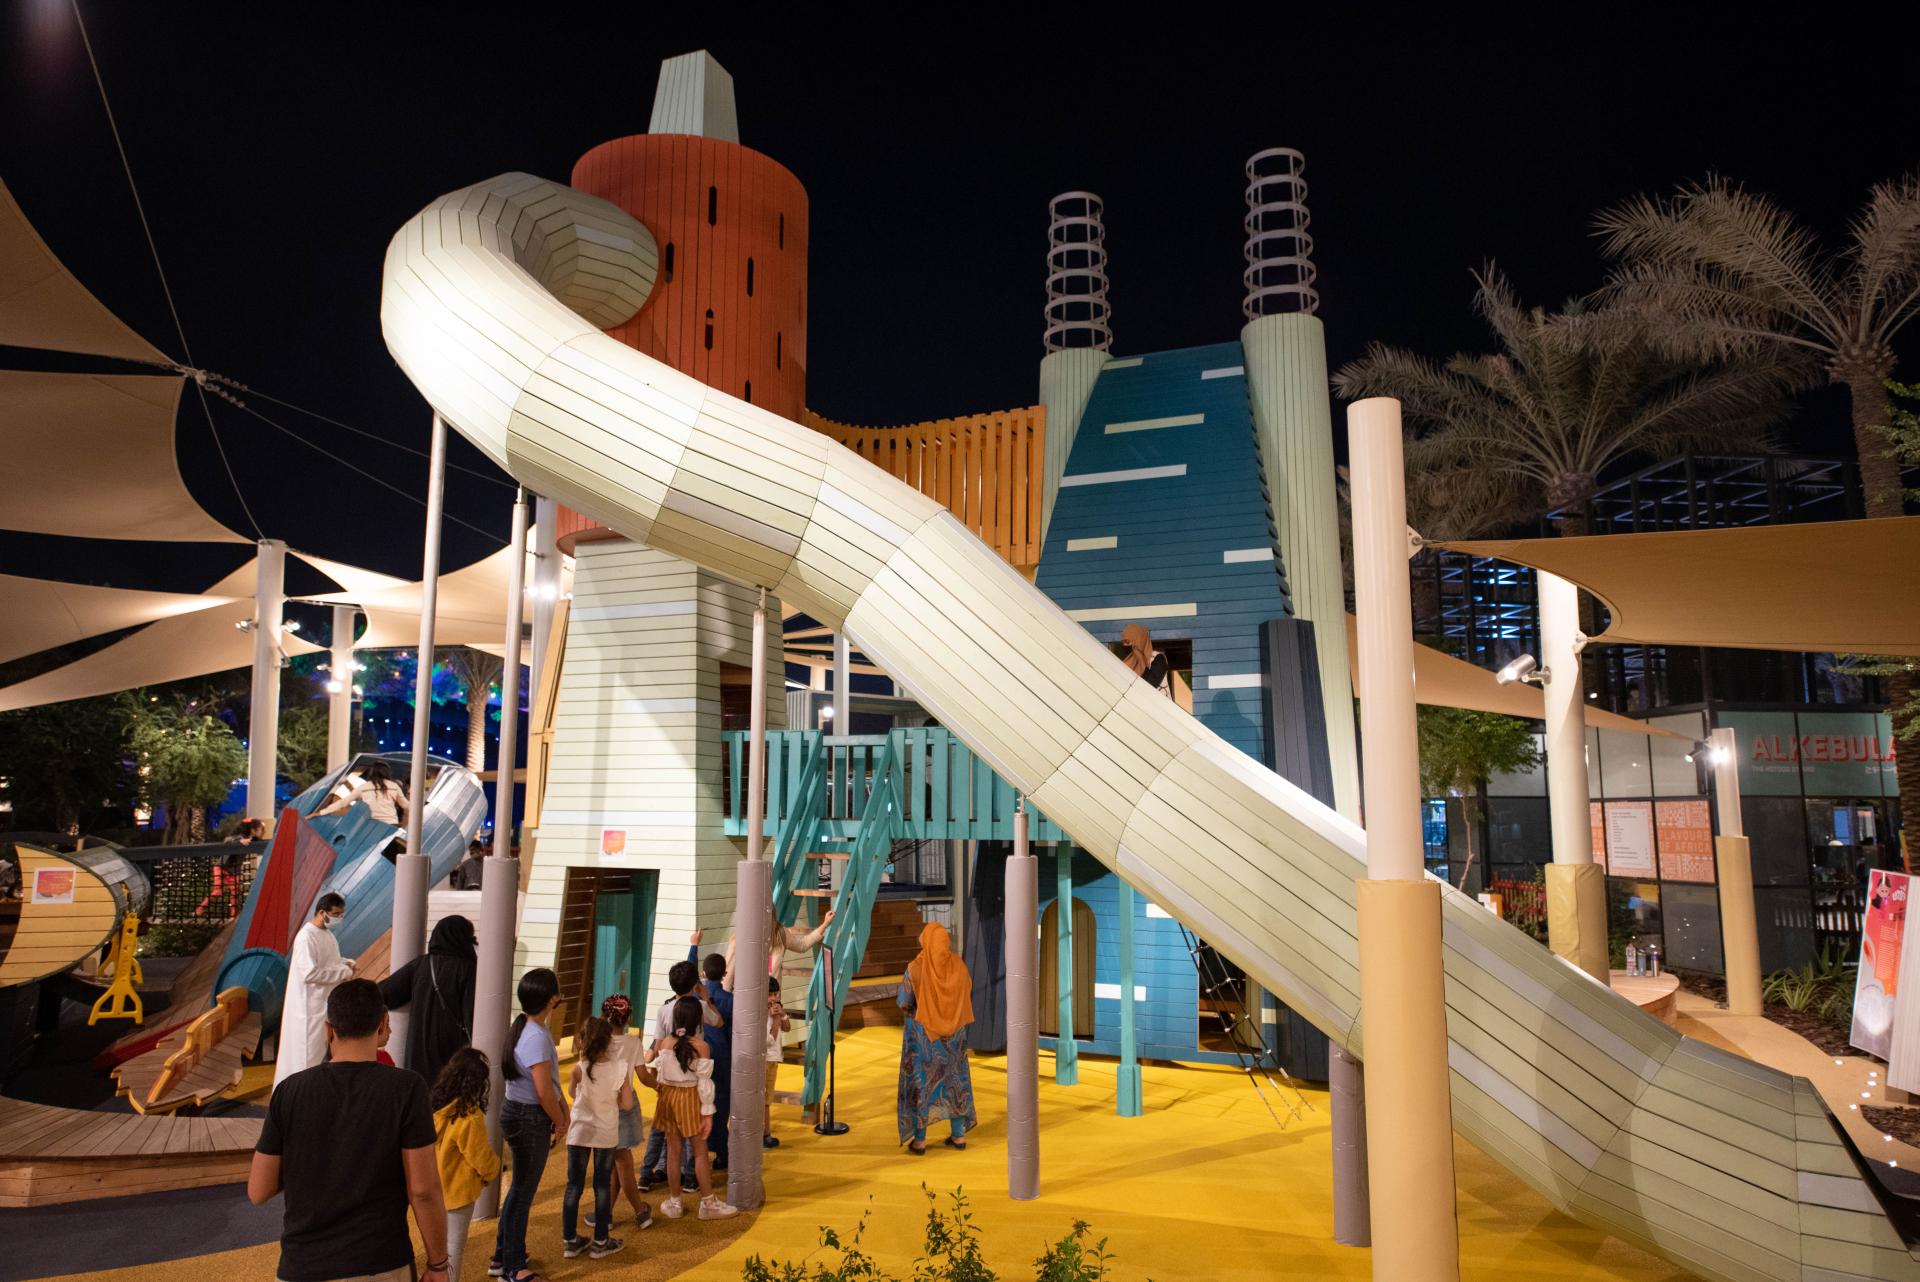 Kids playing at Future city playground, Expo 2020, MONSTRUM playgrounds